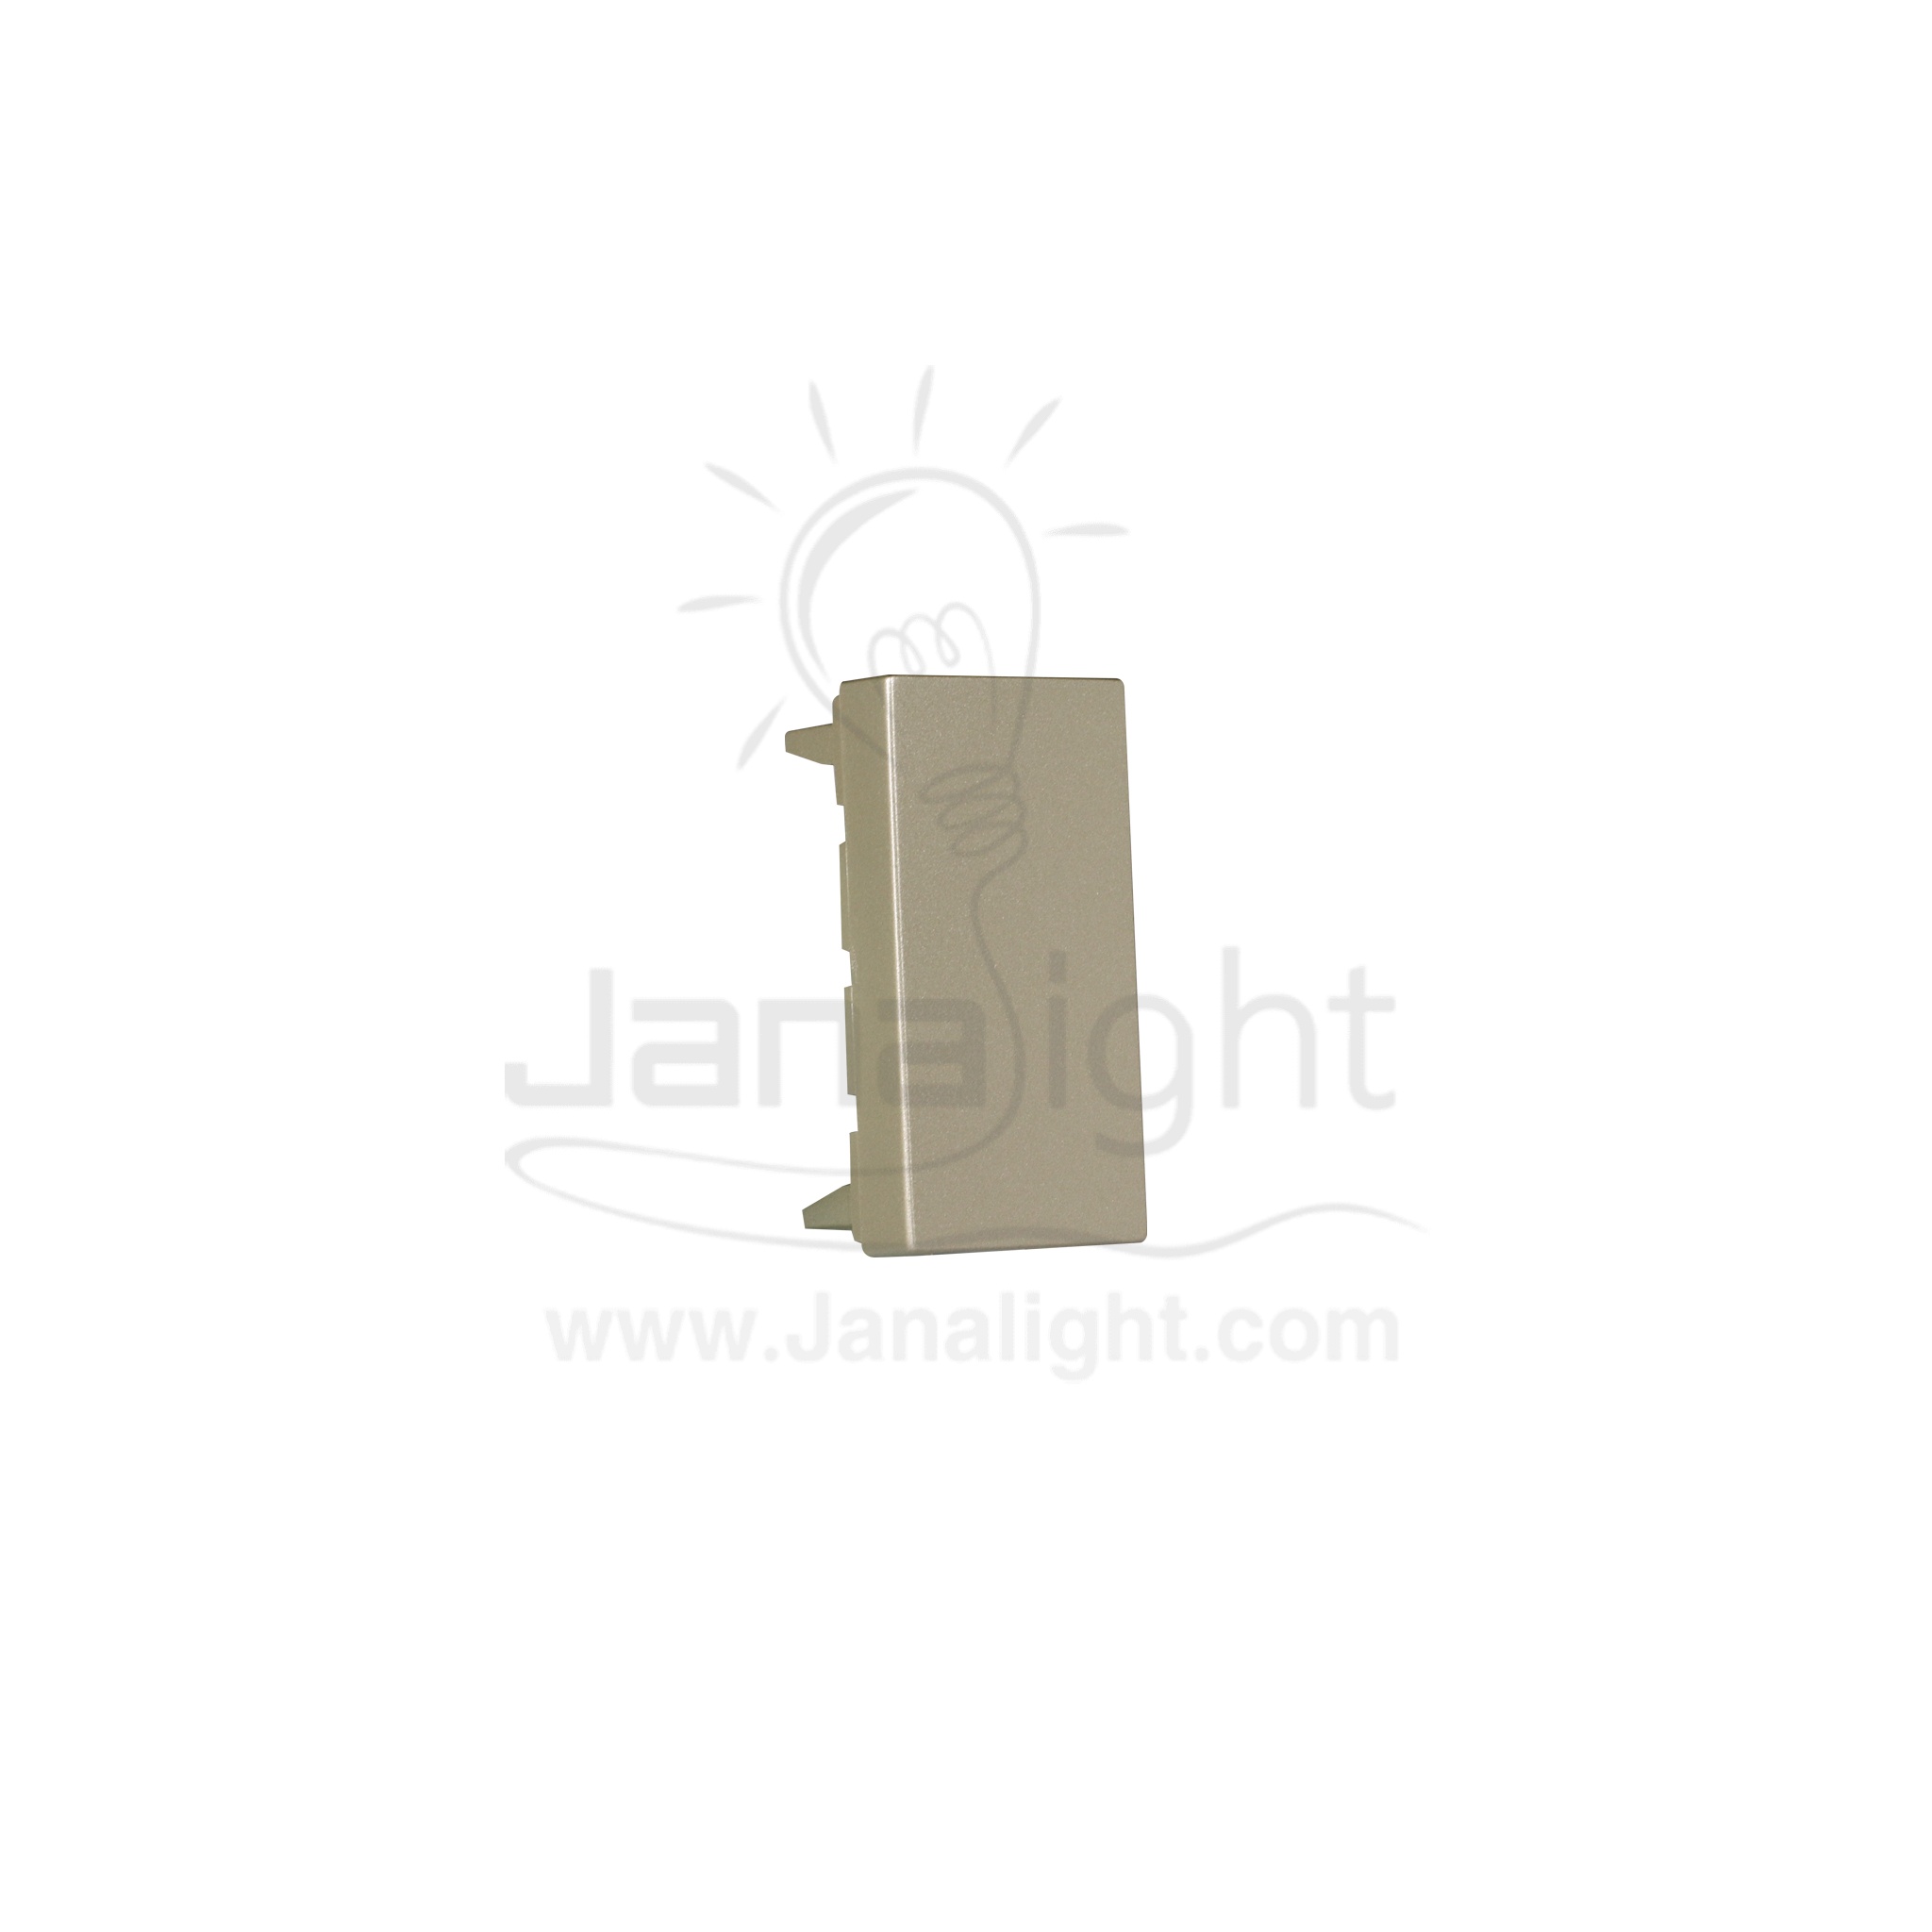 سدادة ليجراند شمباني legrand socket cover champagne 15508009(1)